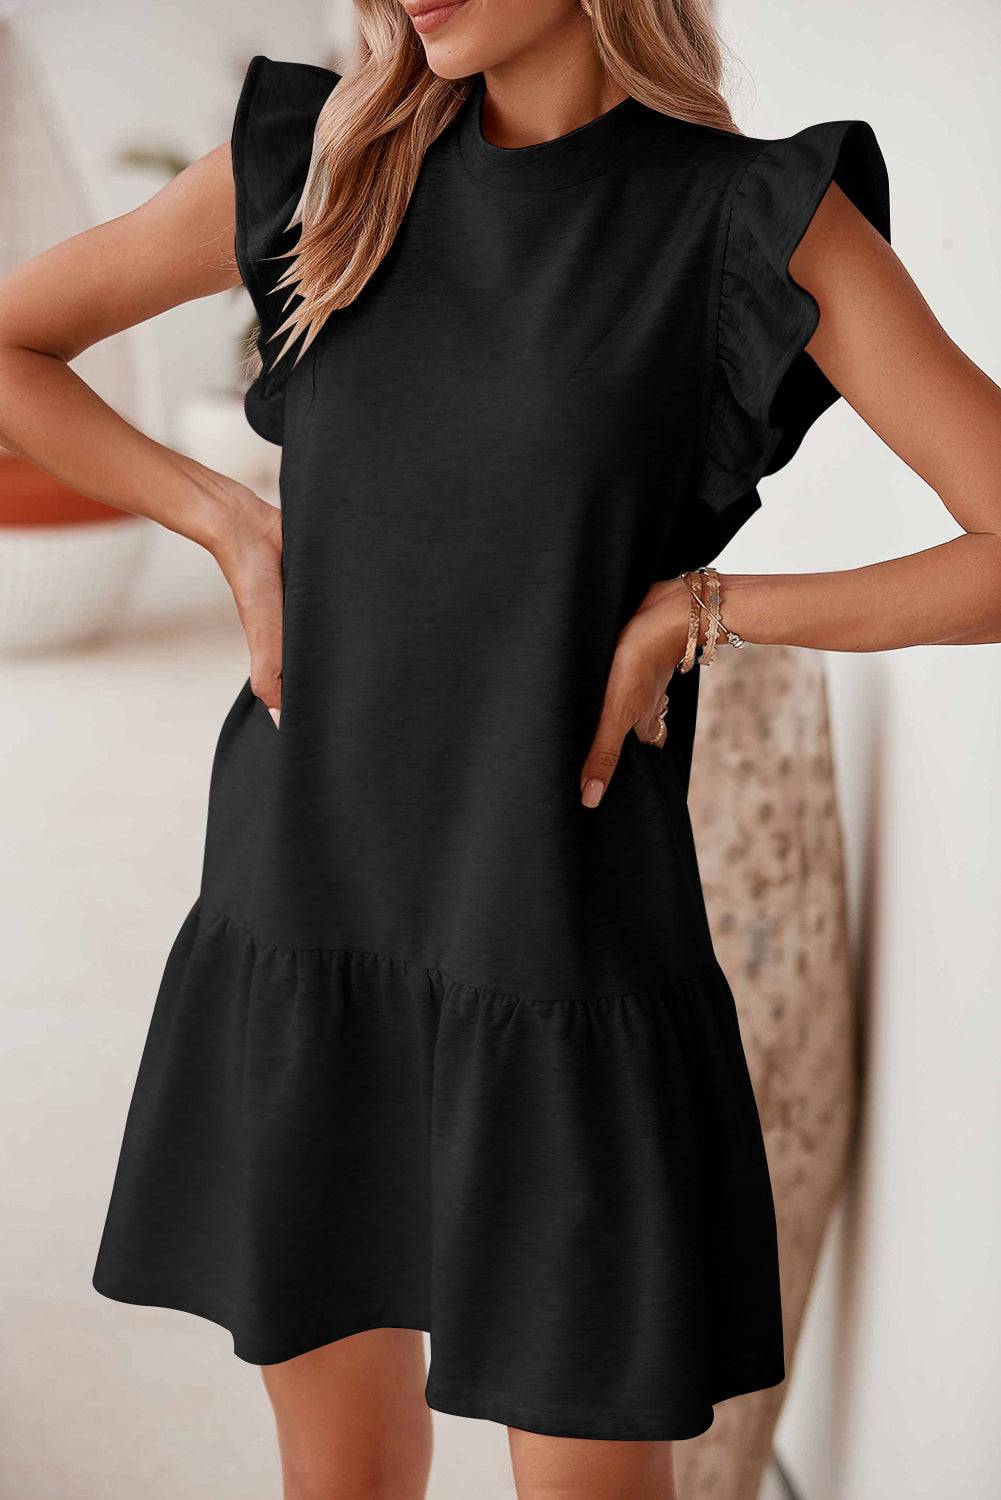 a woman wearing a black dress with ruffles